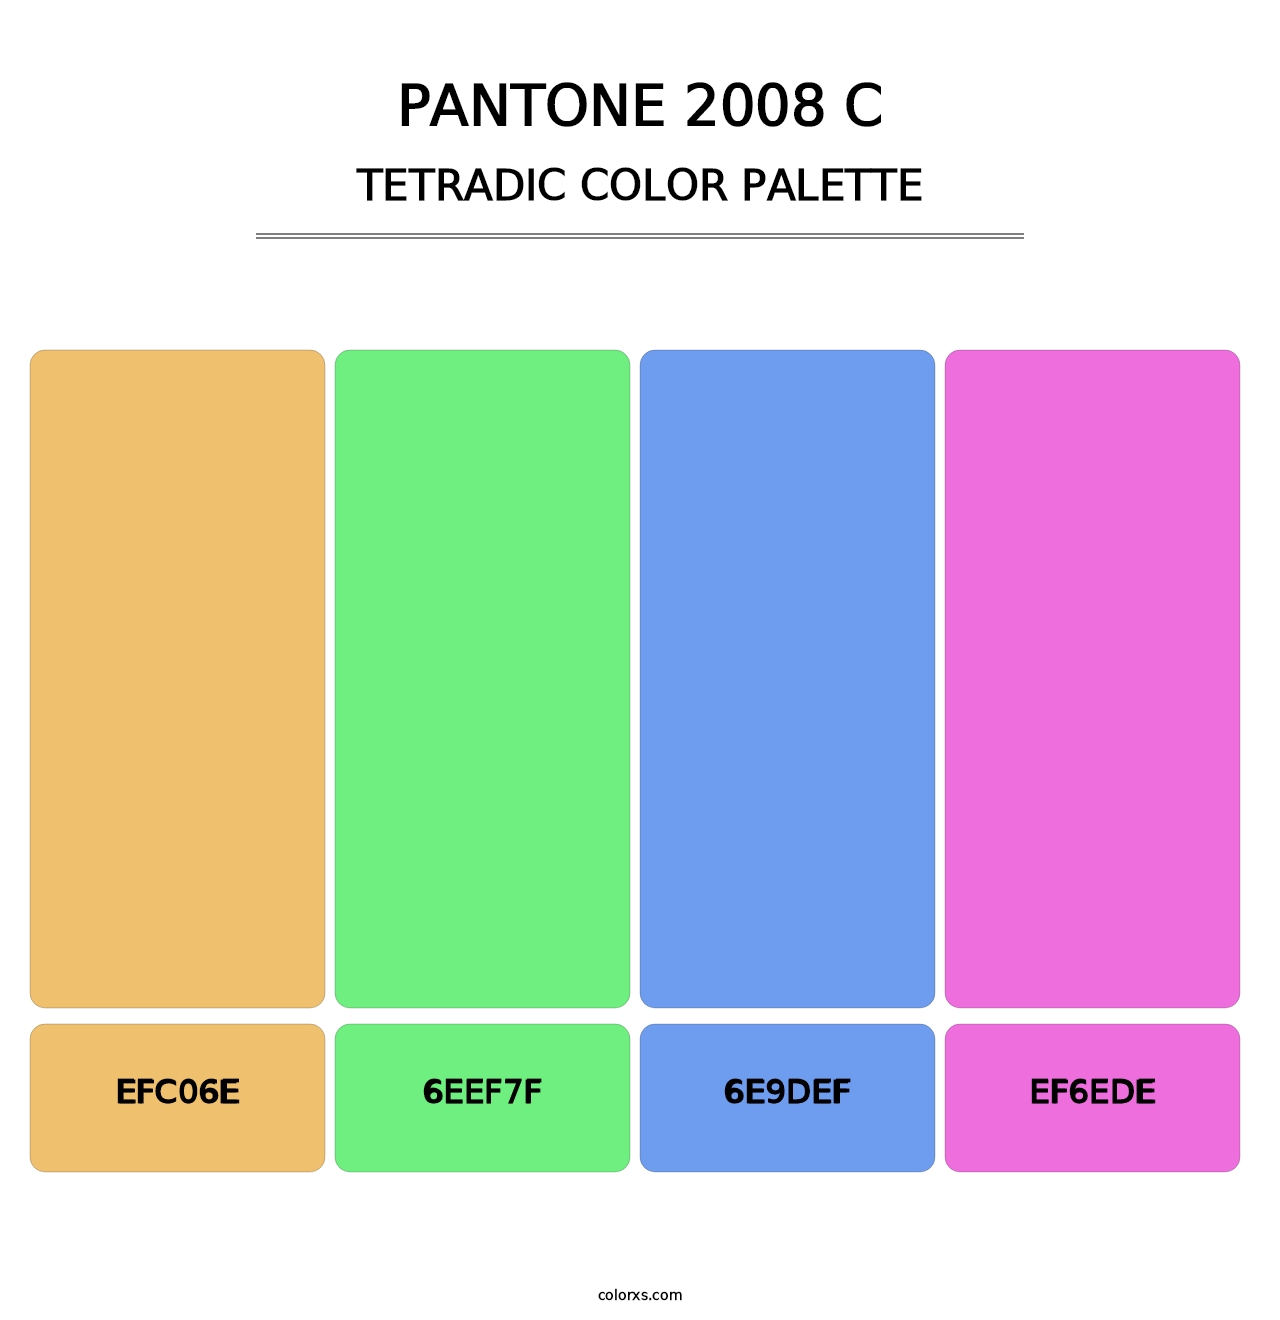 PANTONE 2008 C - Tetradic Color Palette